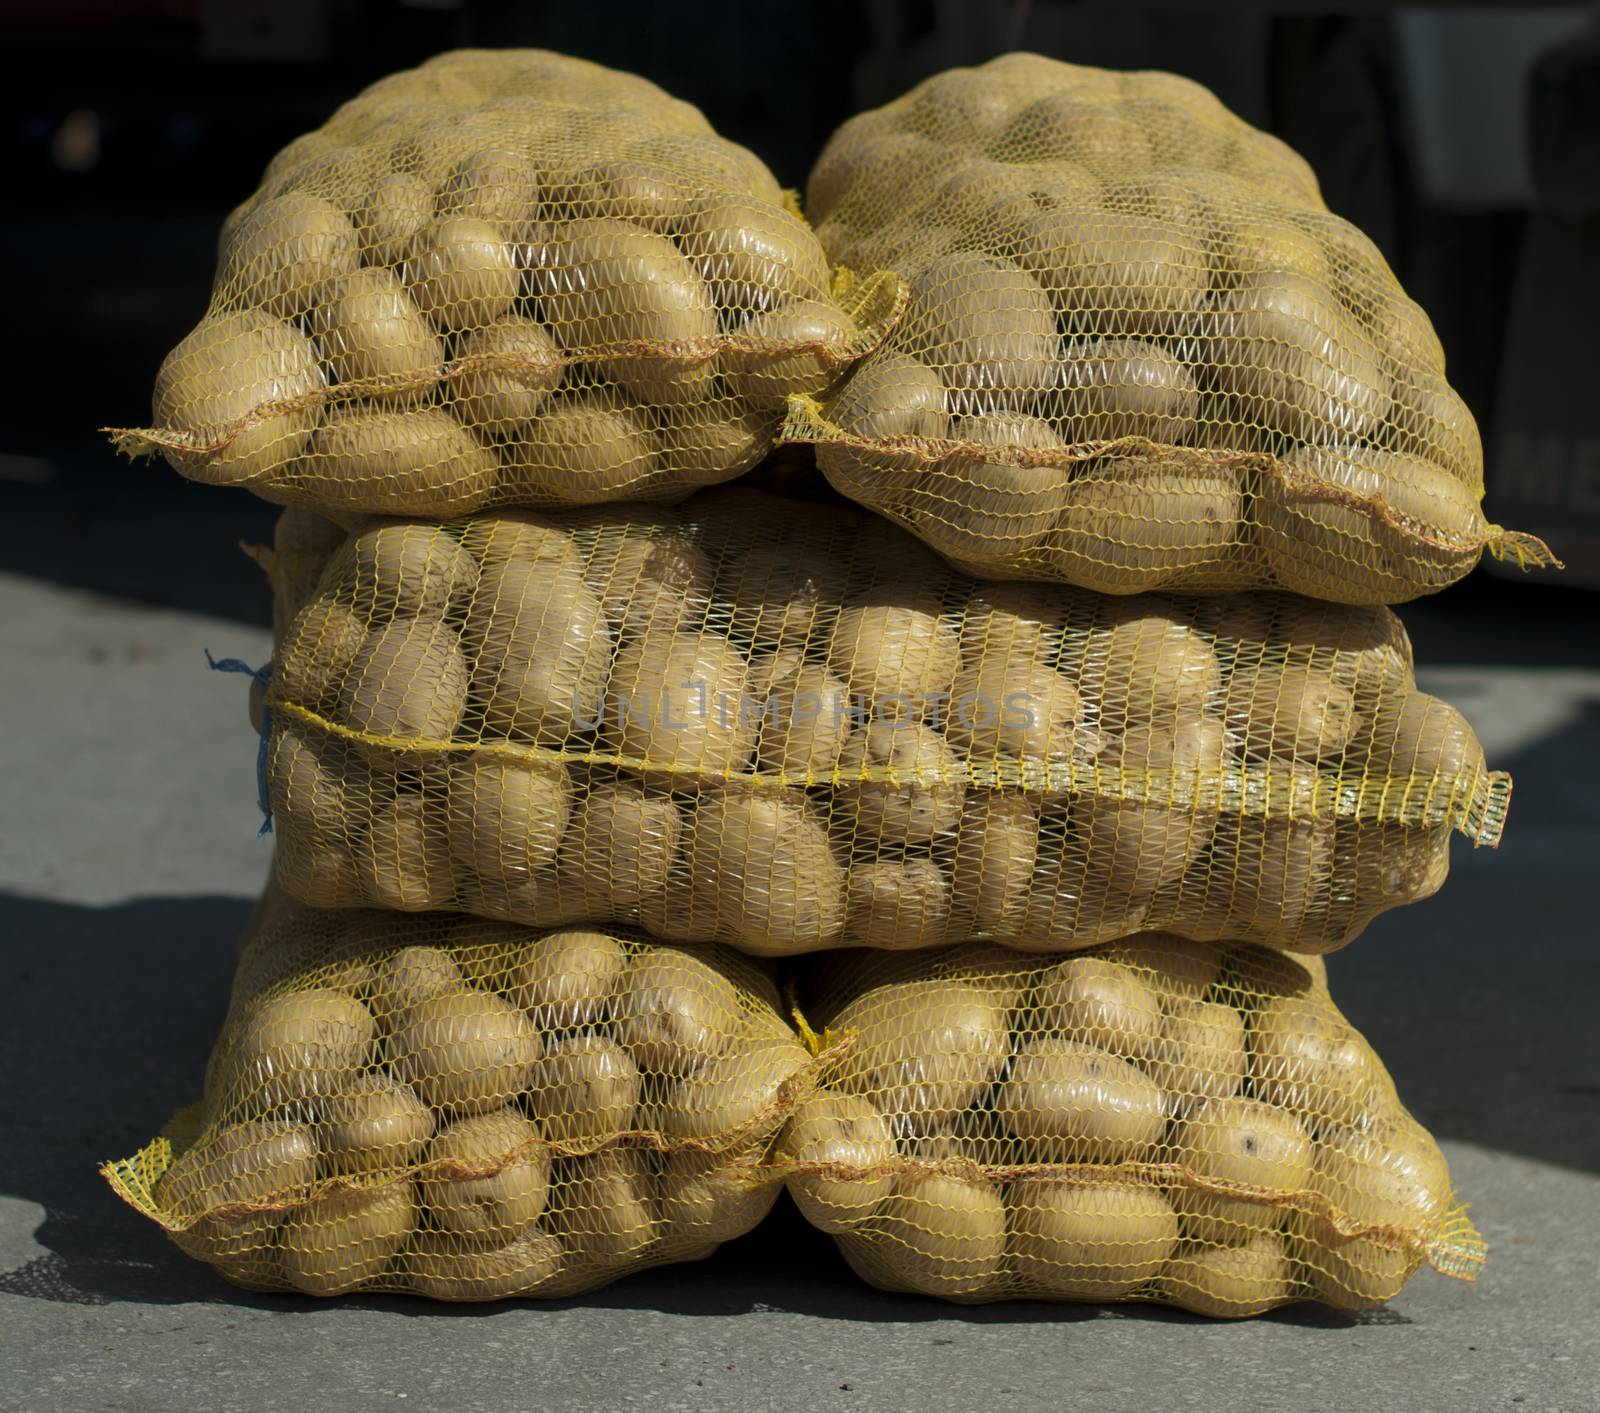 Potatoes in mesh bags by deyan_georgiev